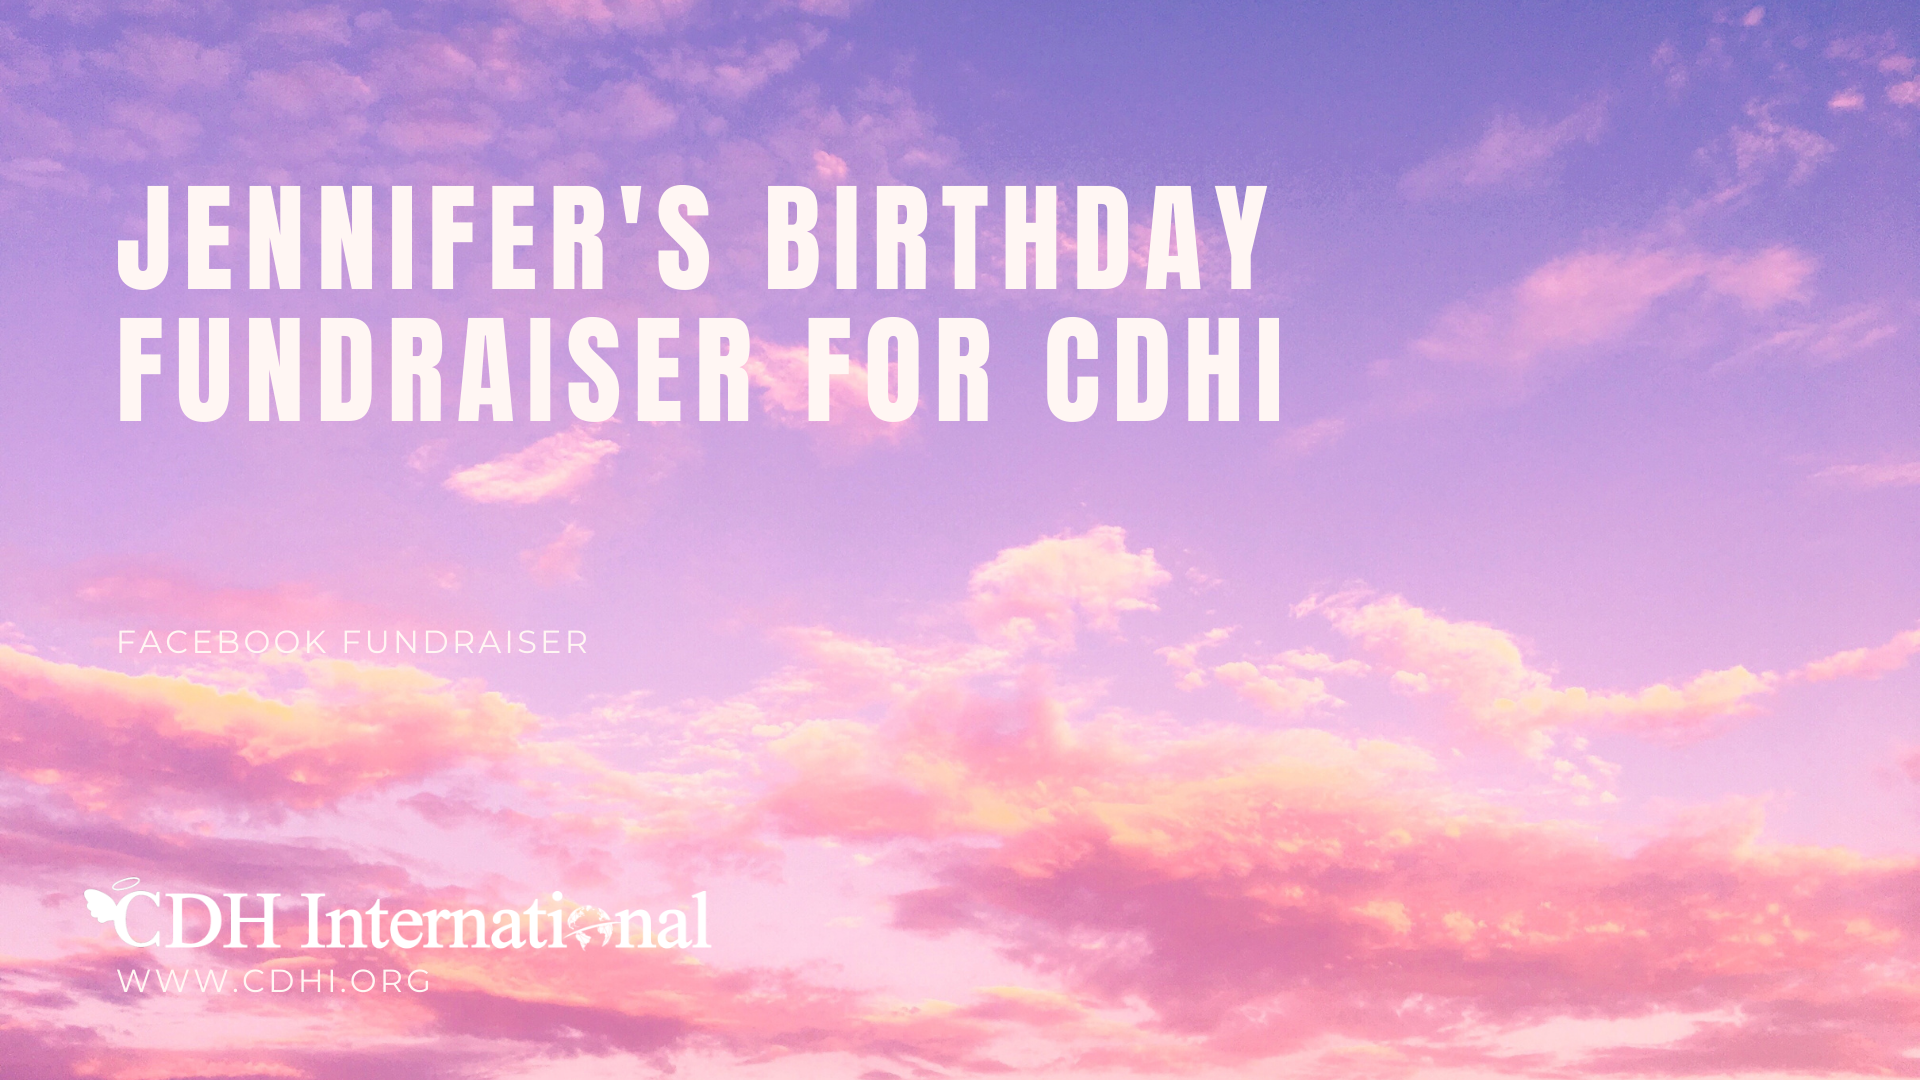 Karl’s Birthday Fundraiser for CDHi